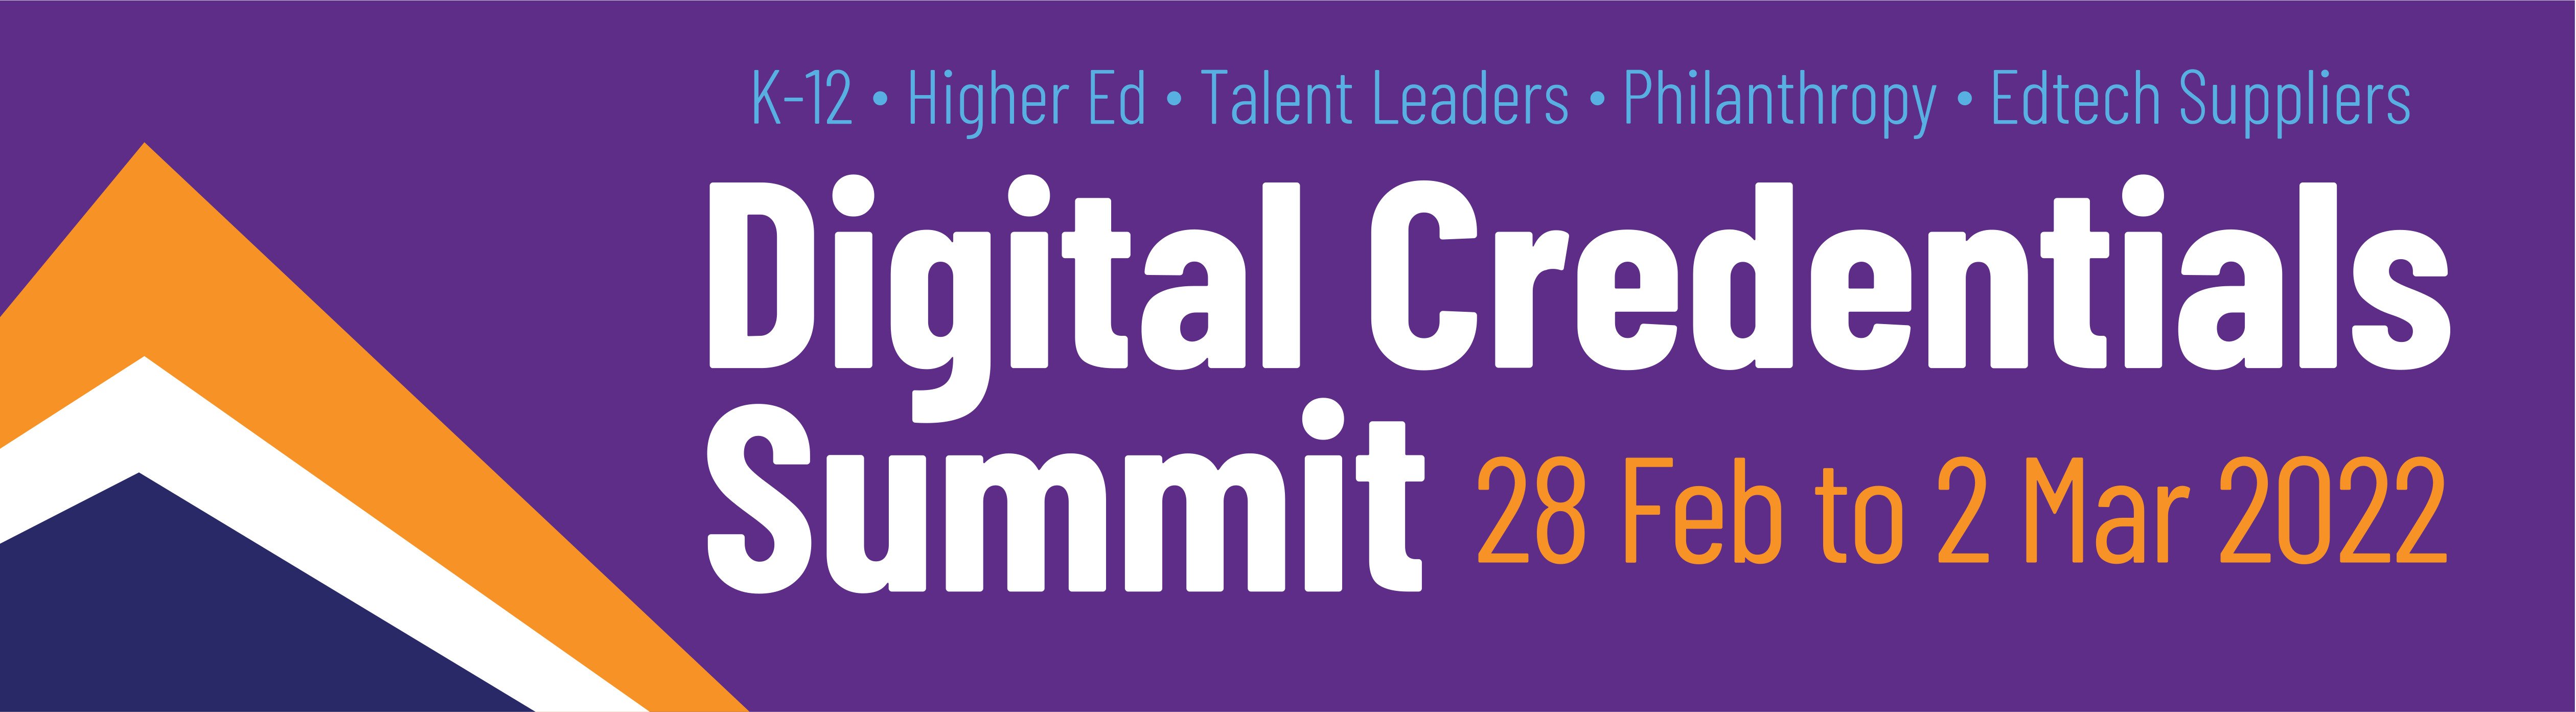 IMS Digital Credentials Summit